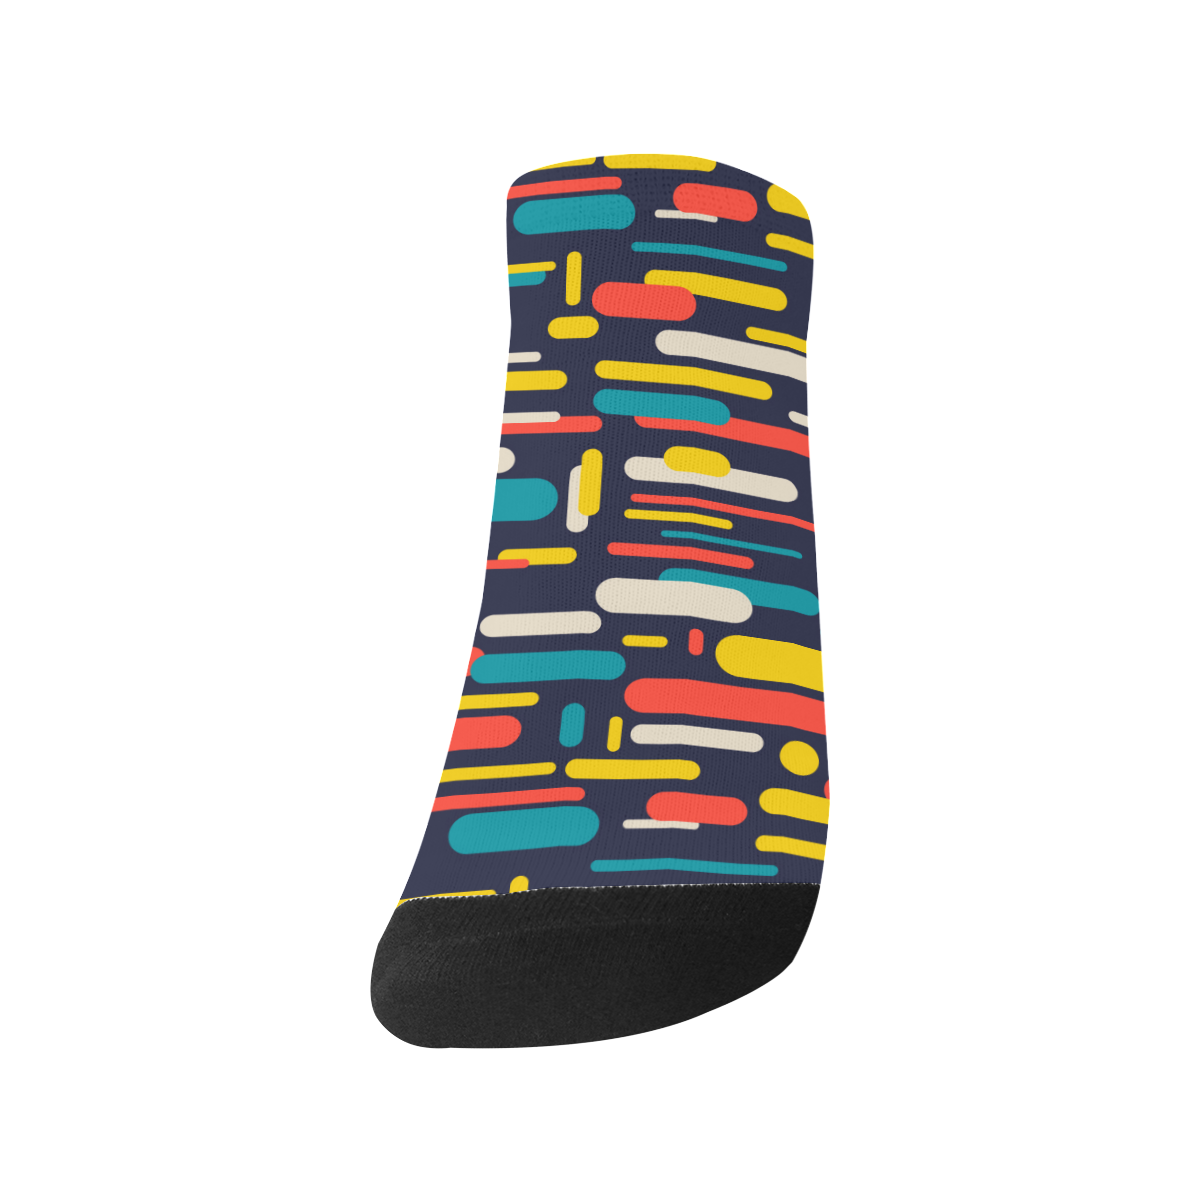 Colorful Rectangles Men's Ankle Socks